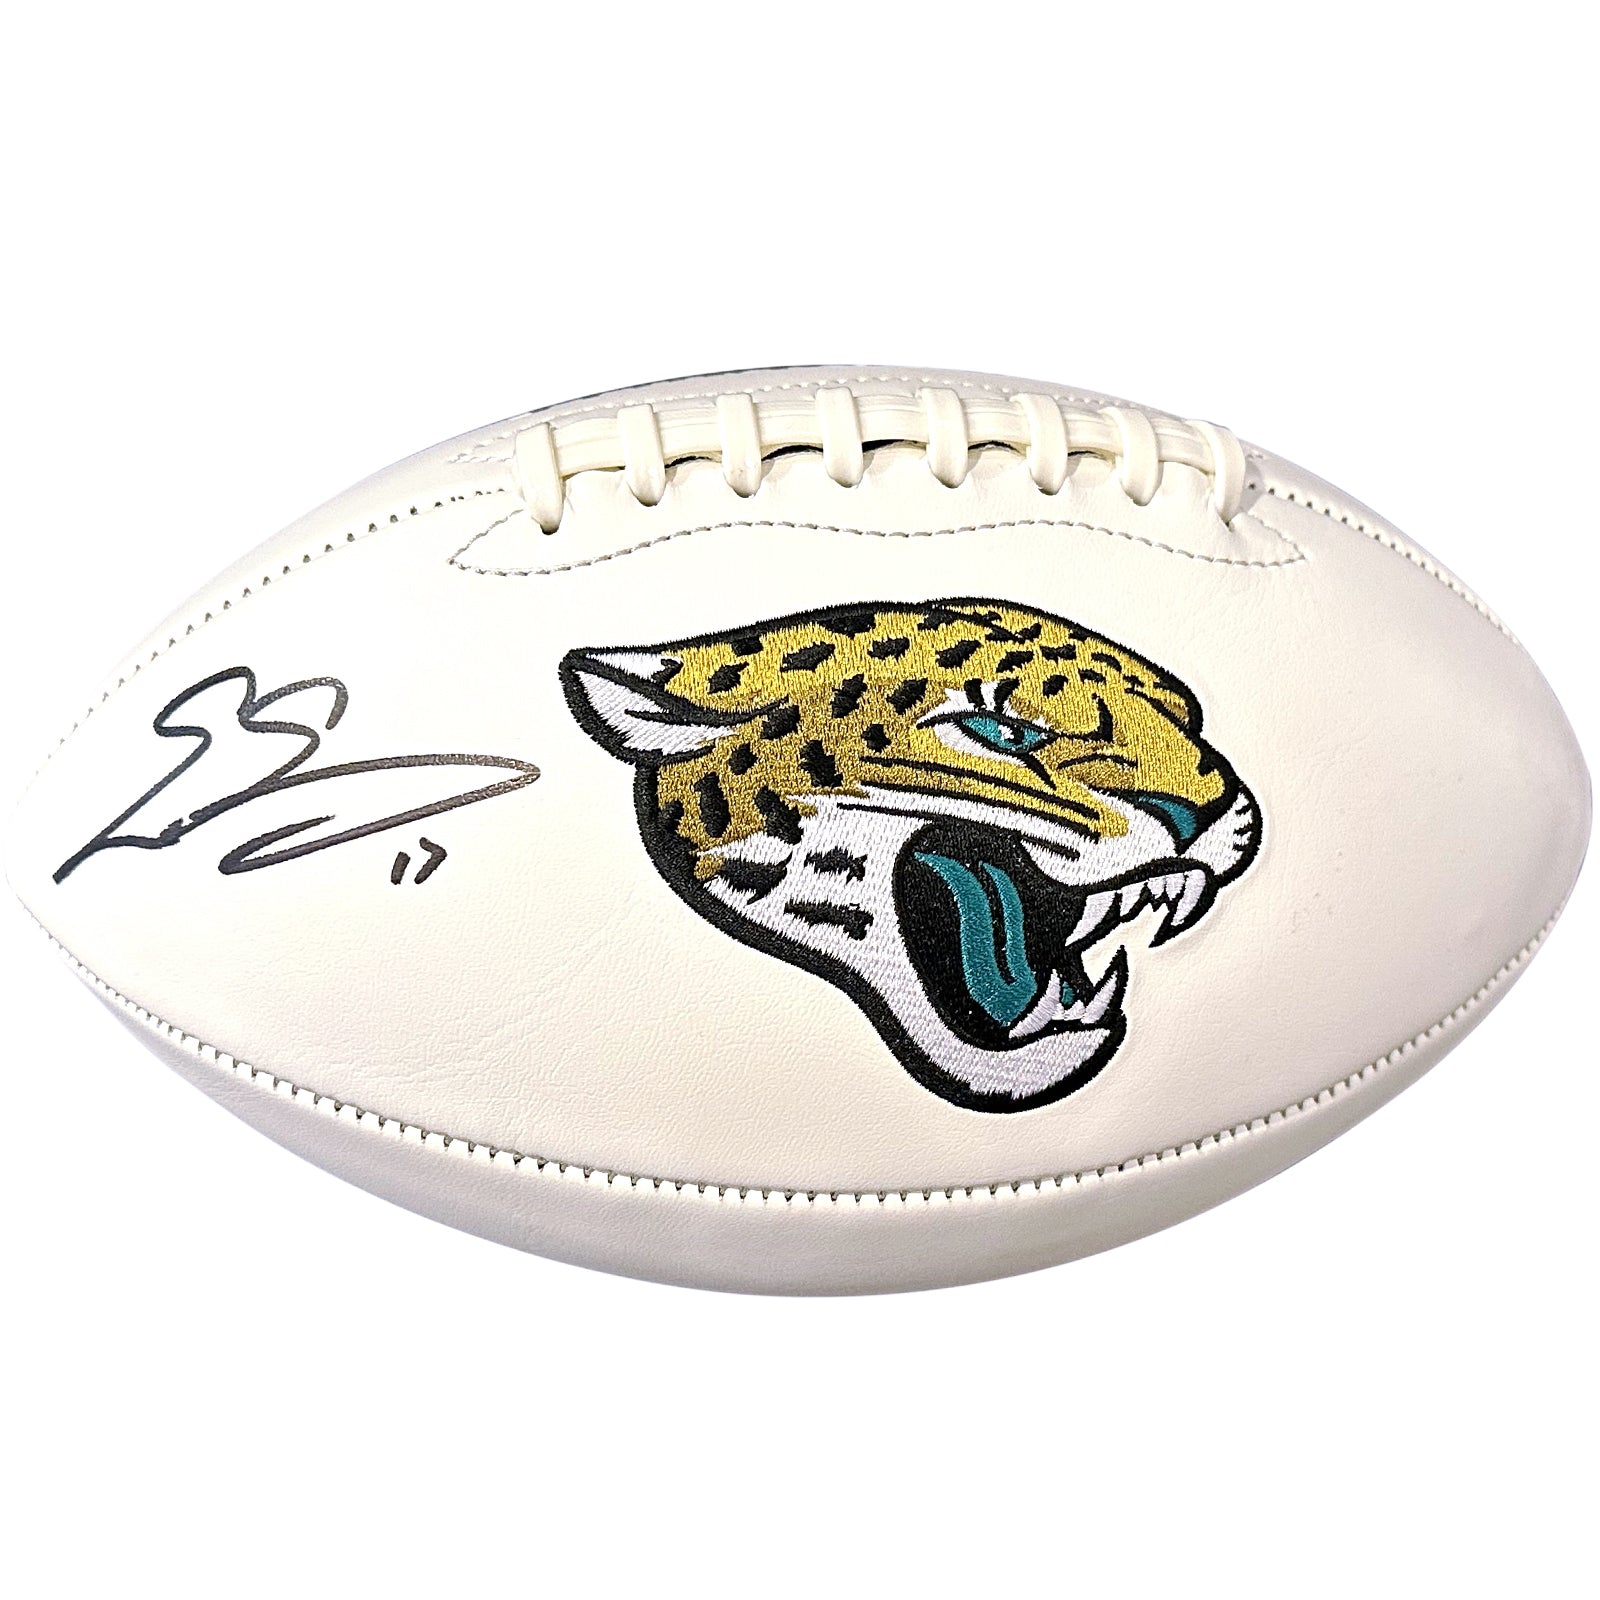 Evan Engram Autographed Jacksonville Jaguars Logo Football - Beckett